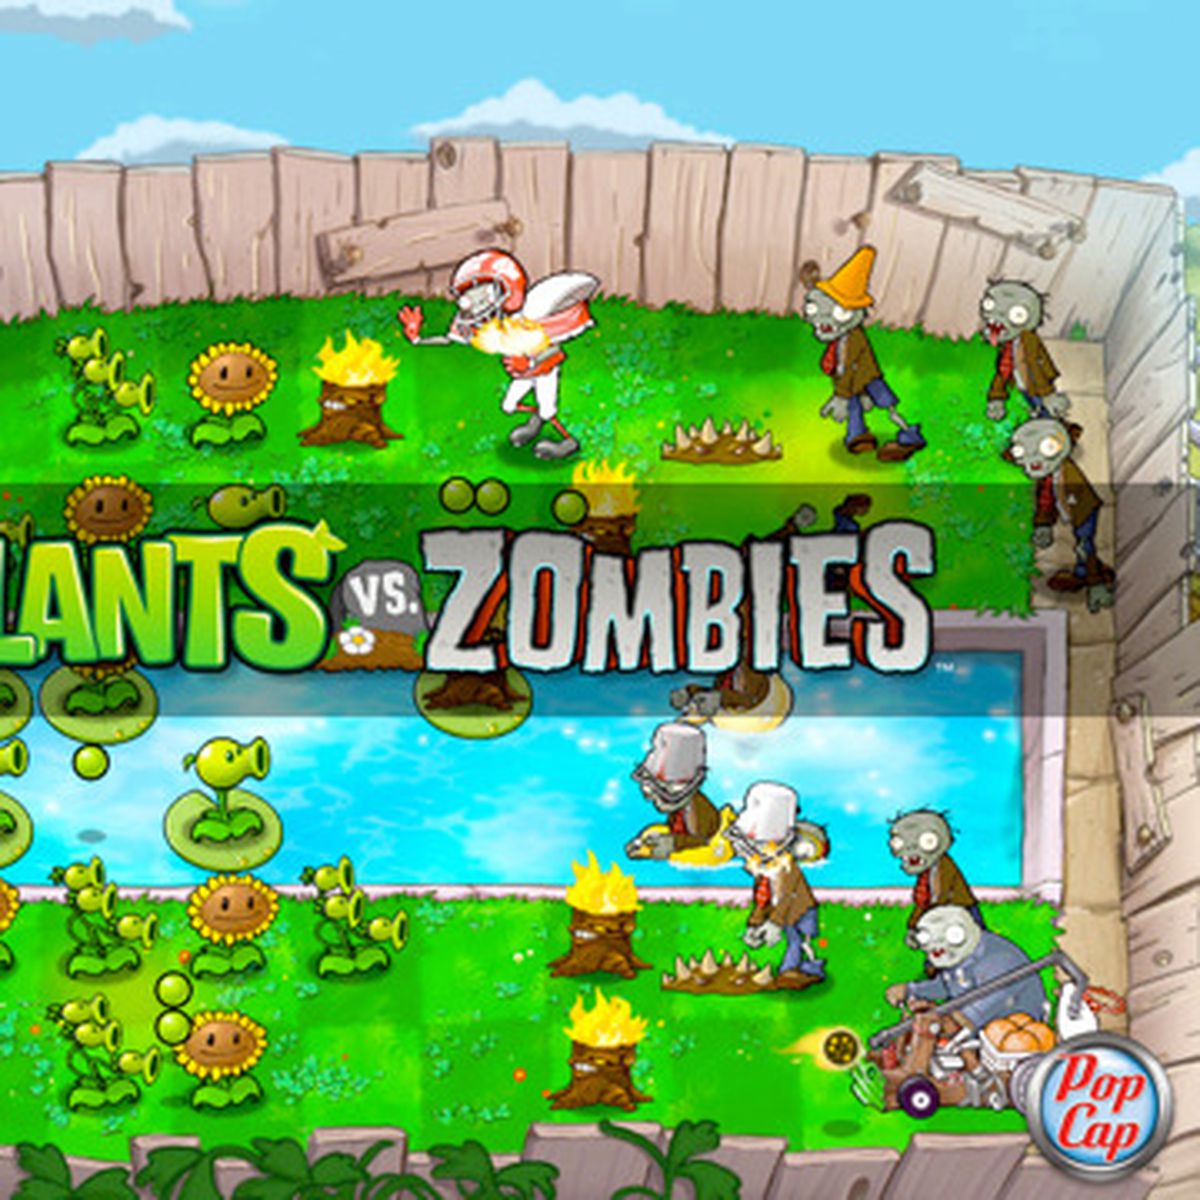 PopCap Games Confirms Plants vs. Zombies Sequel for Summer Release